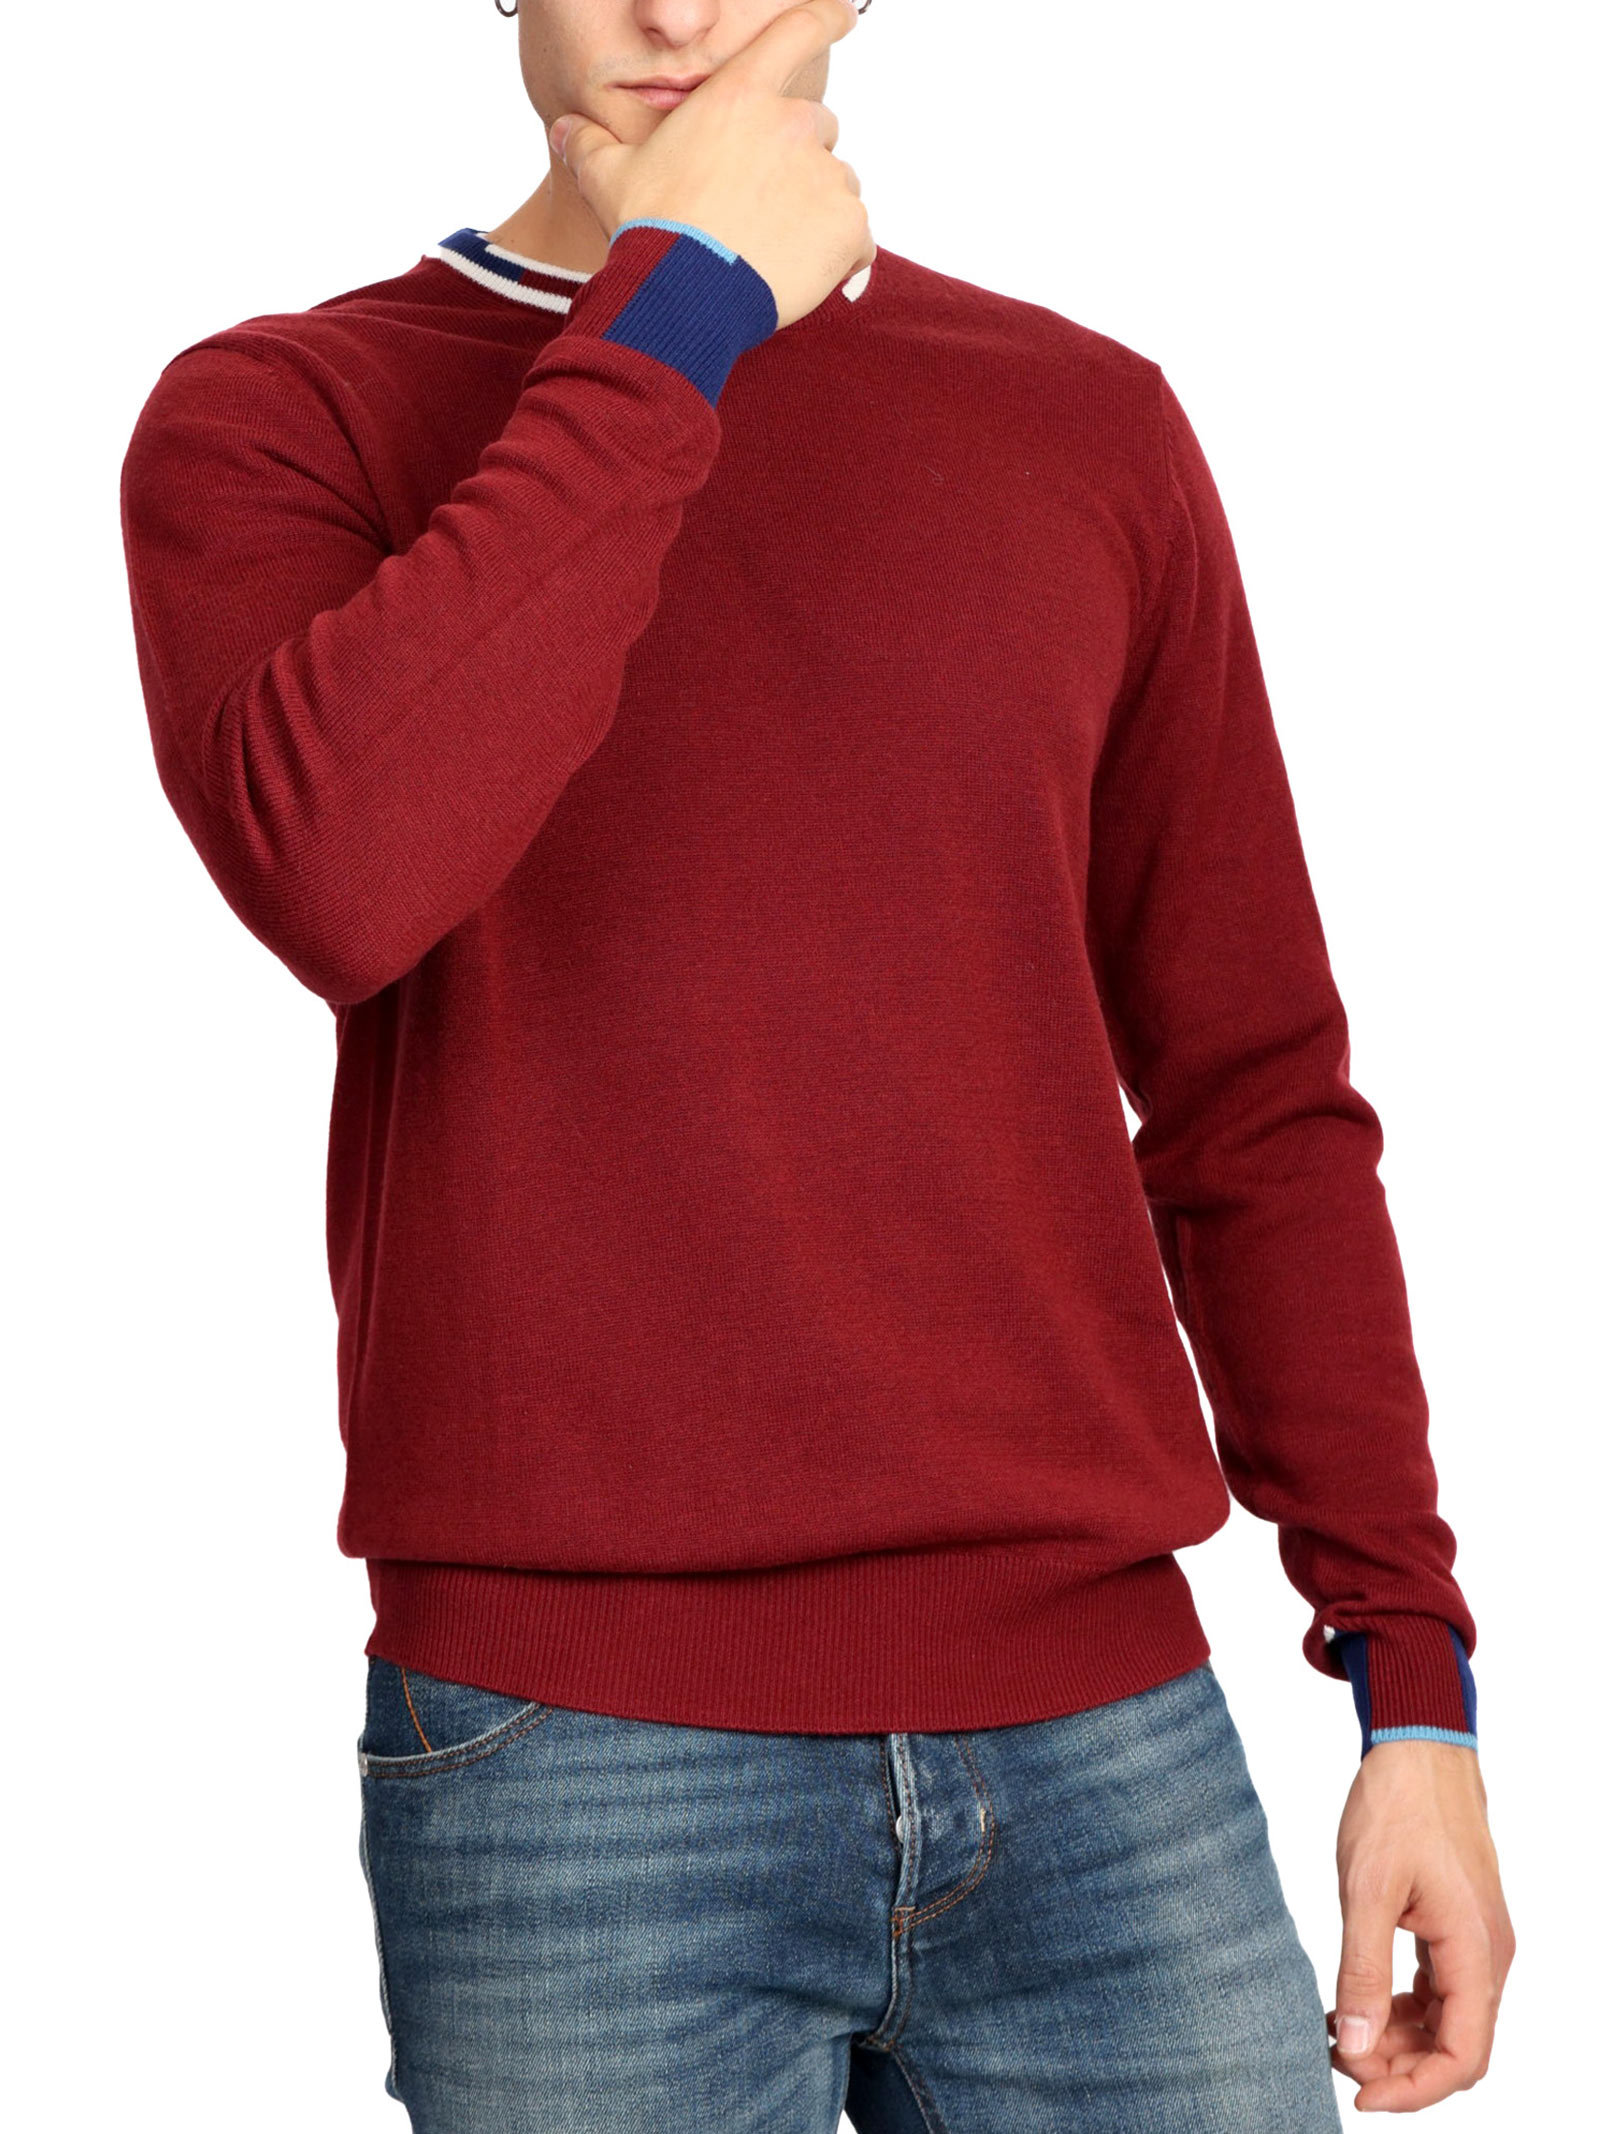 Peuterey Марлон 01 свитер, красный